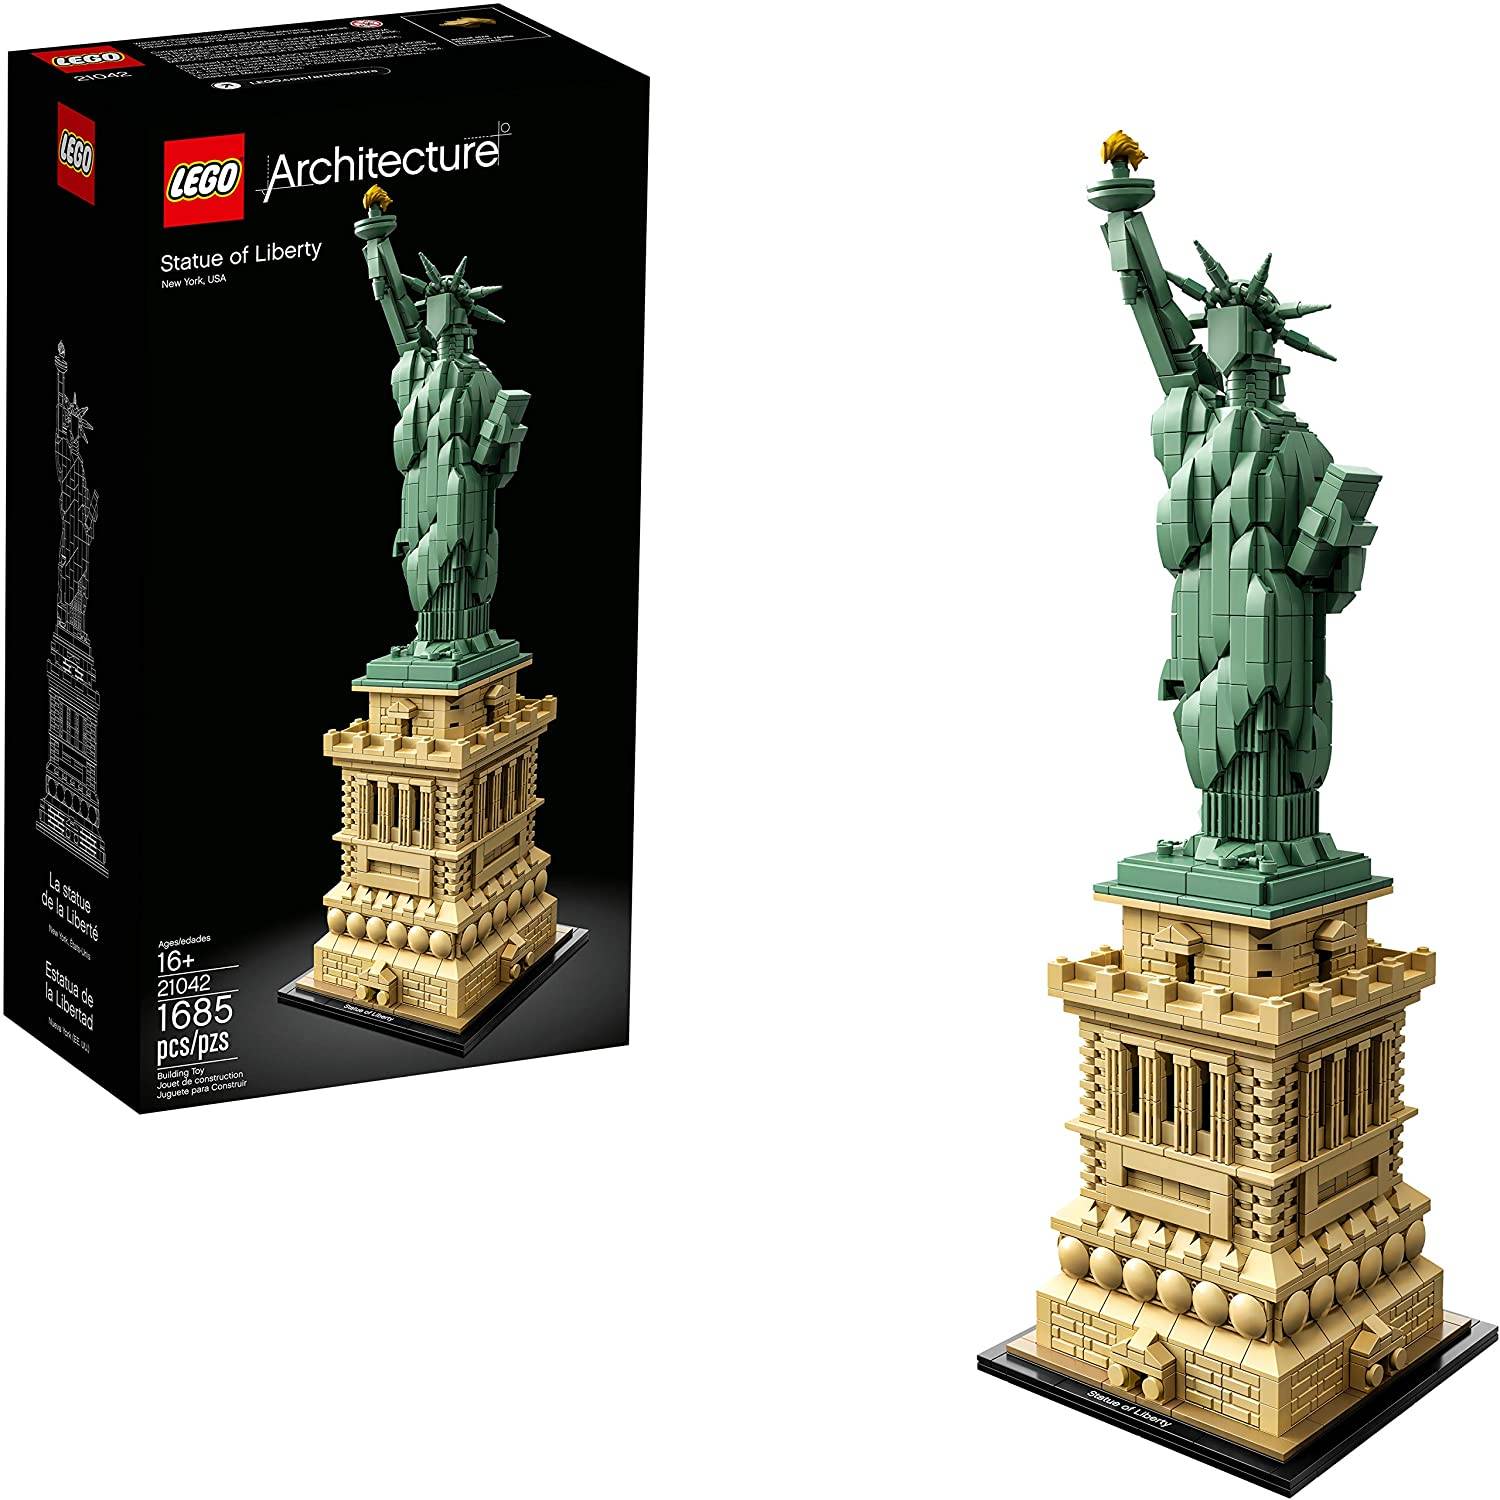  LEGO Architecture Statue of Liberty